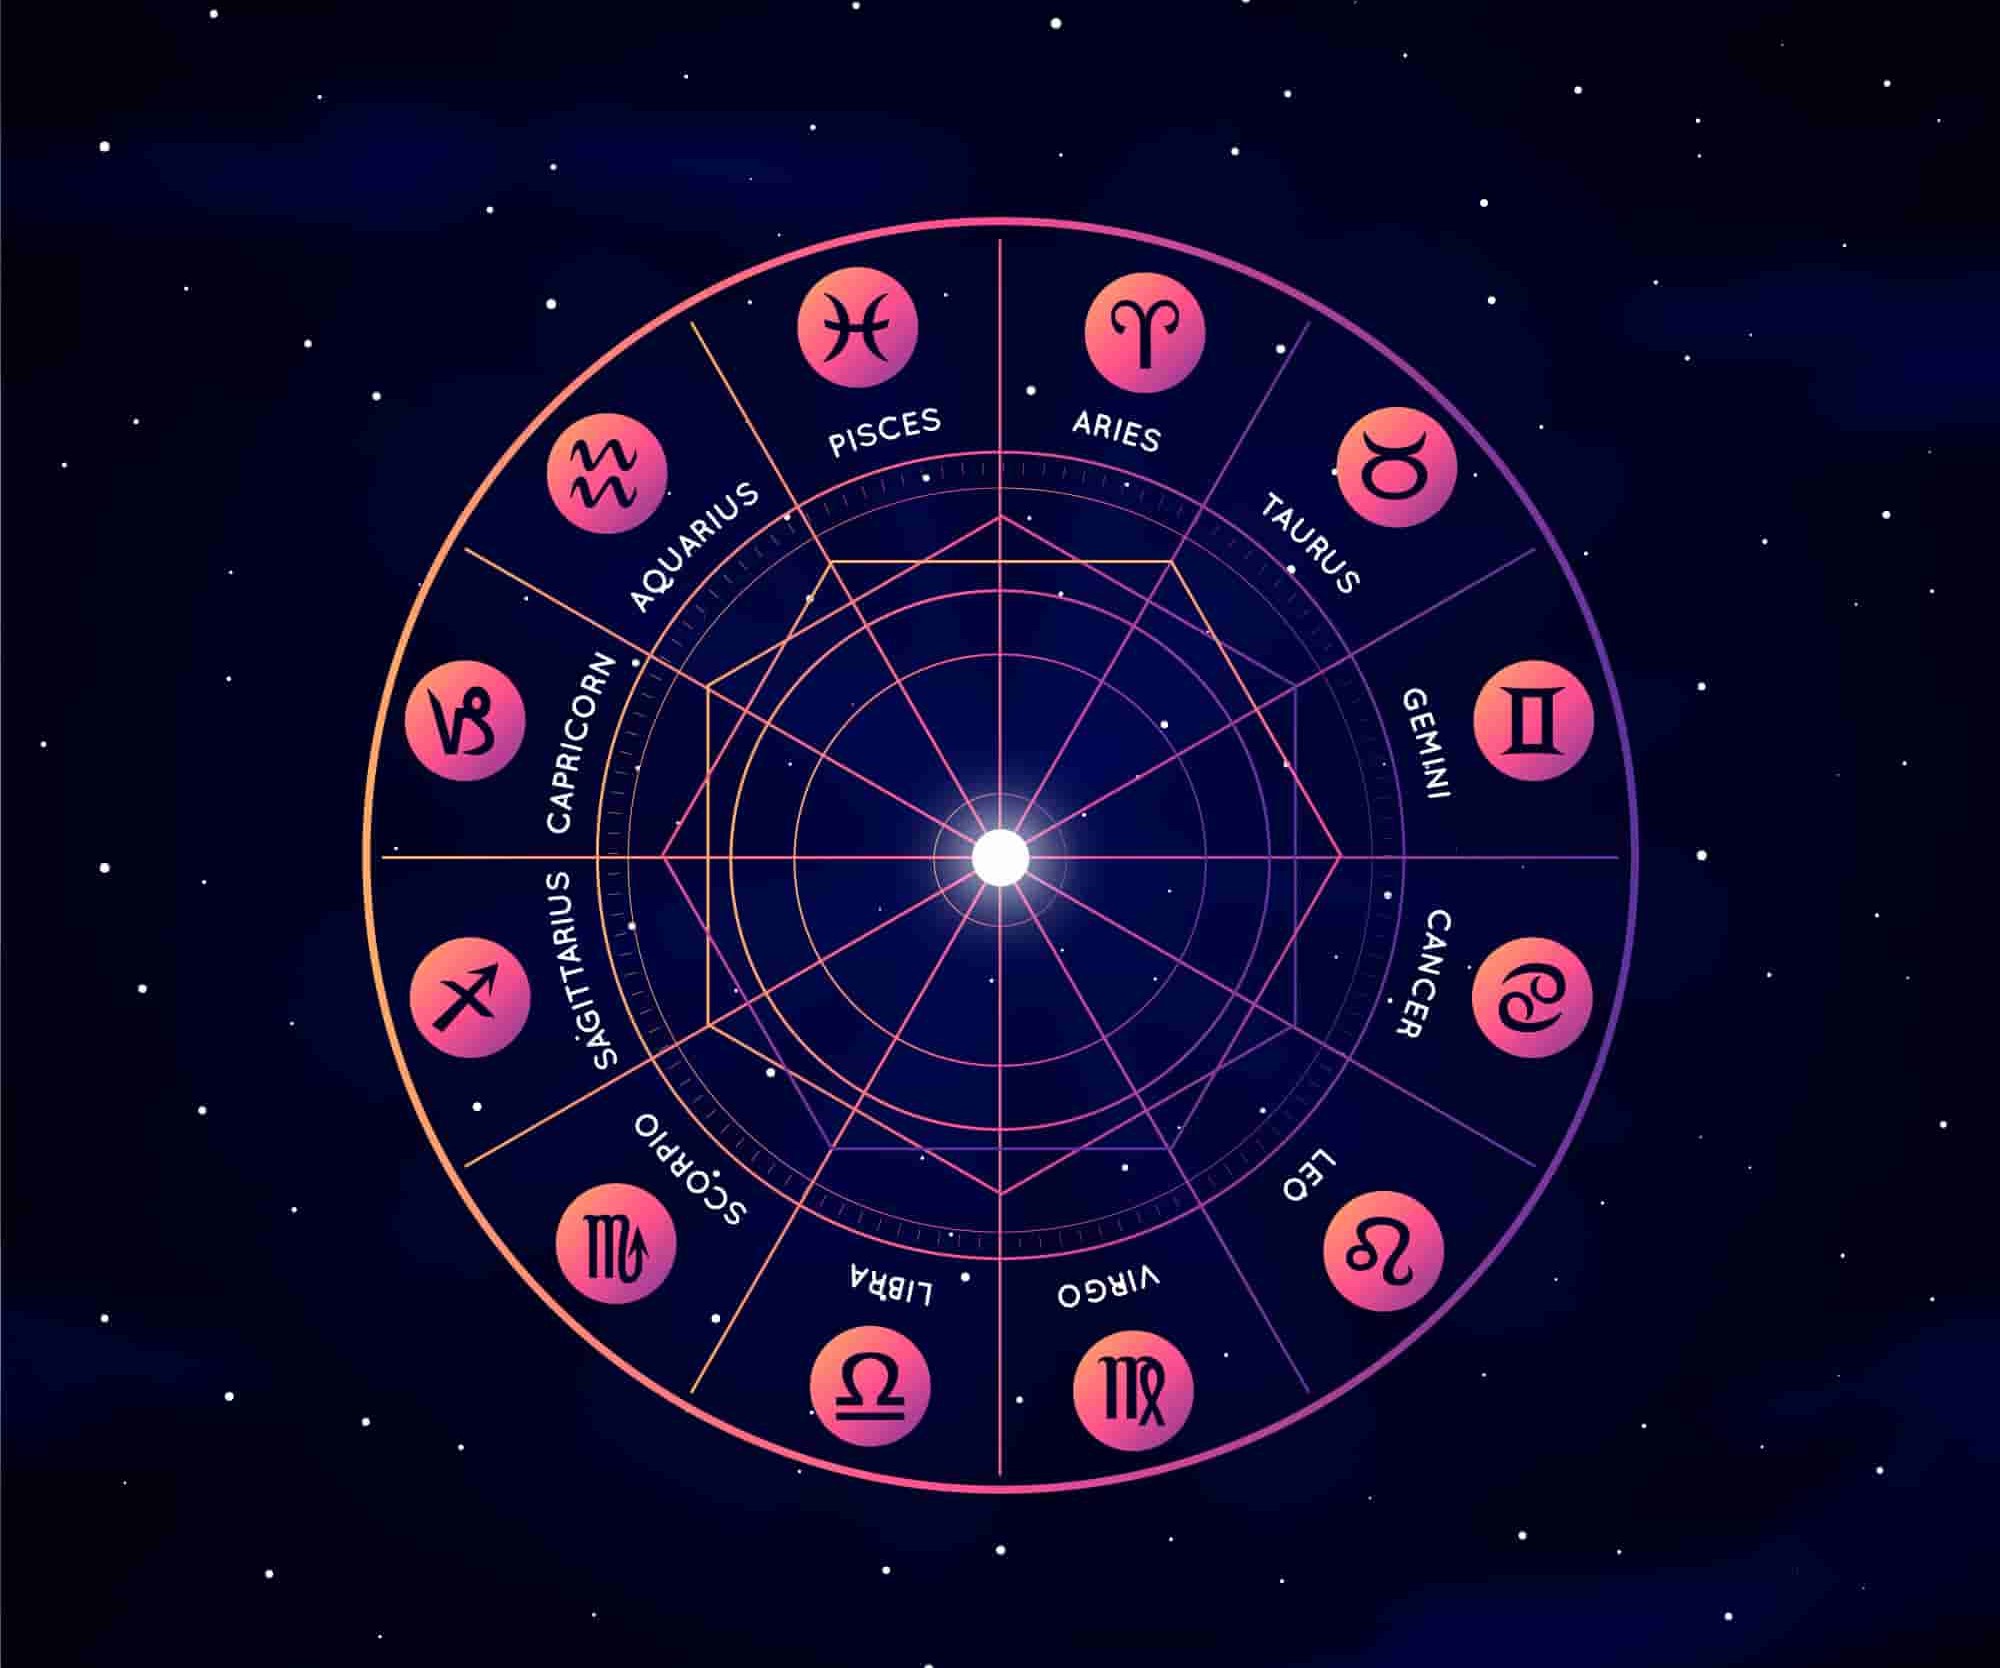 Demandez à un astrologue